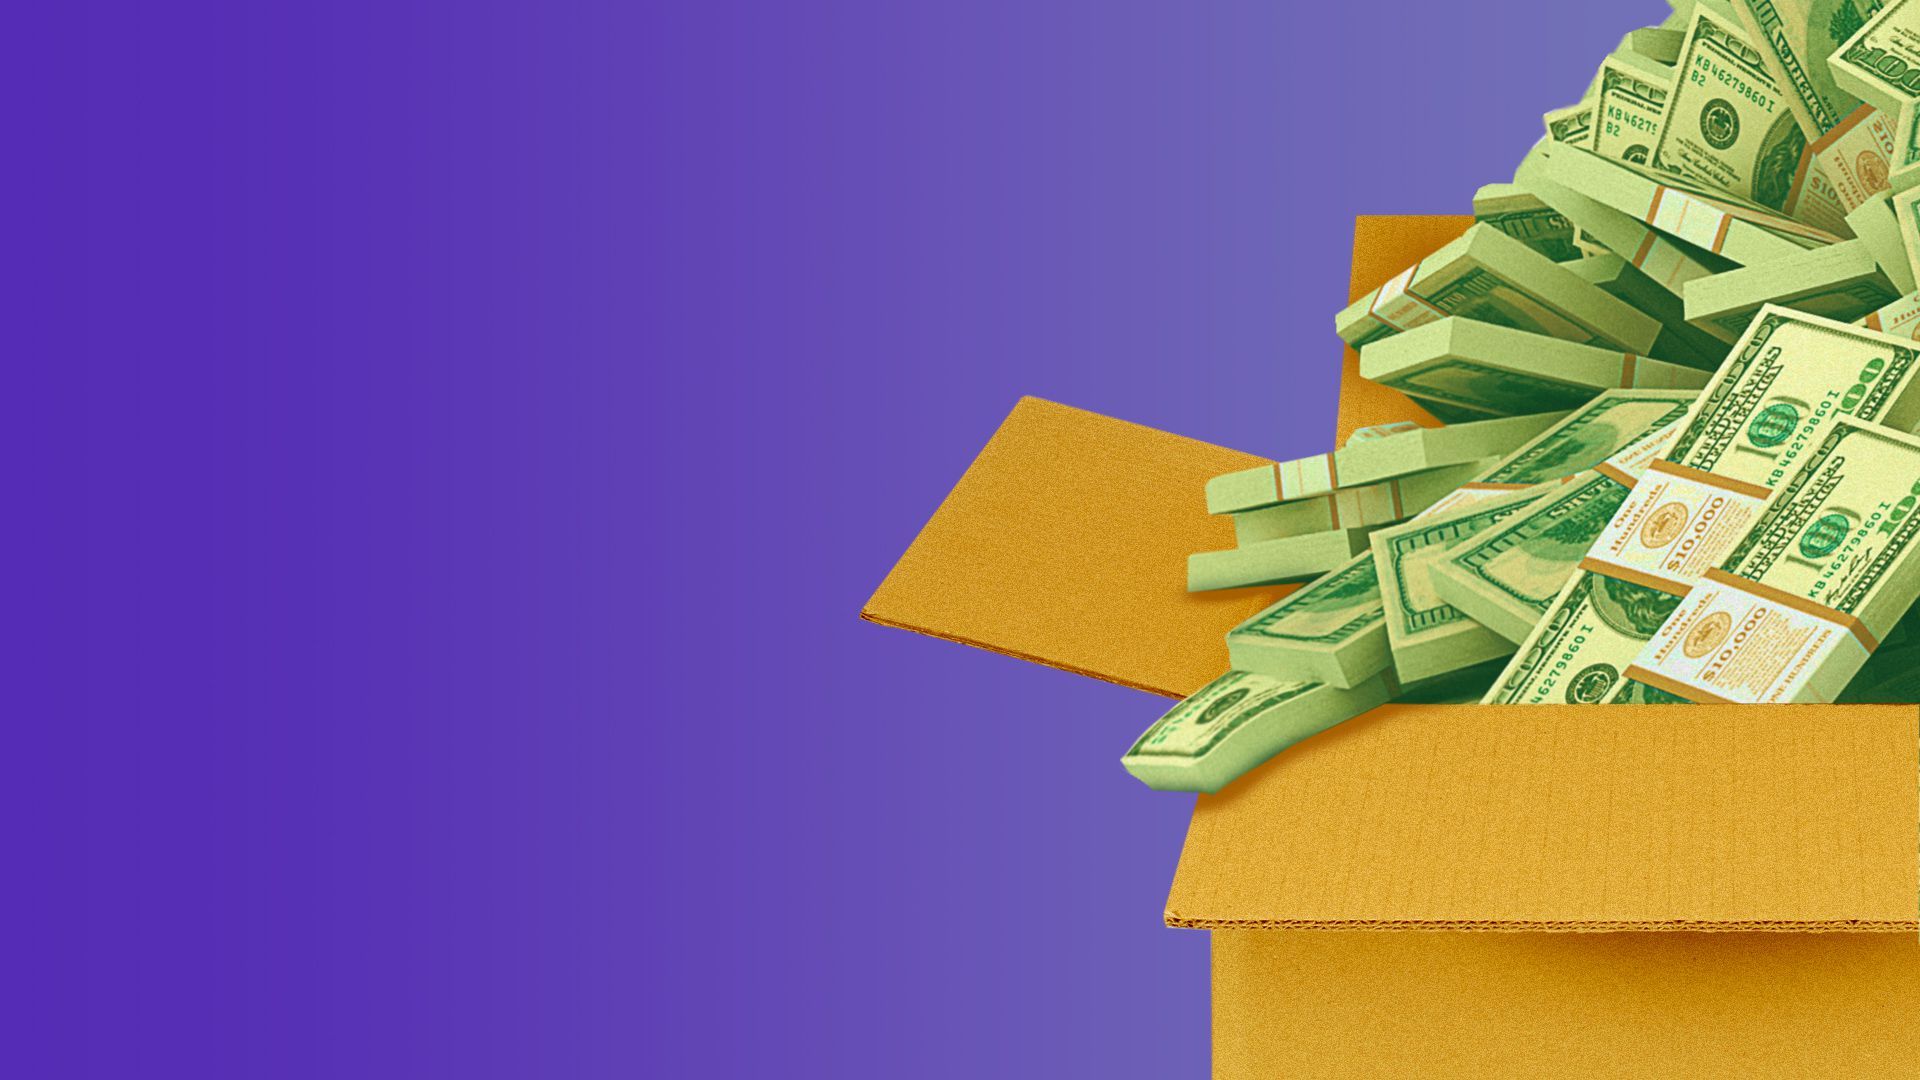 Illustration of a cardboard box full of money.